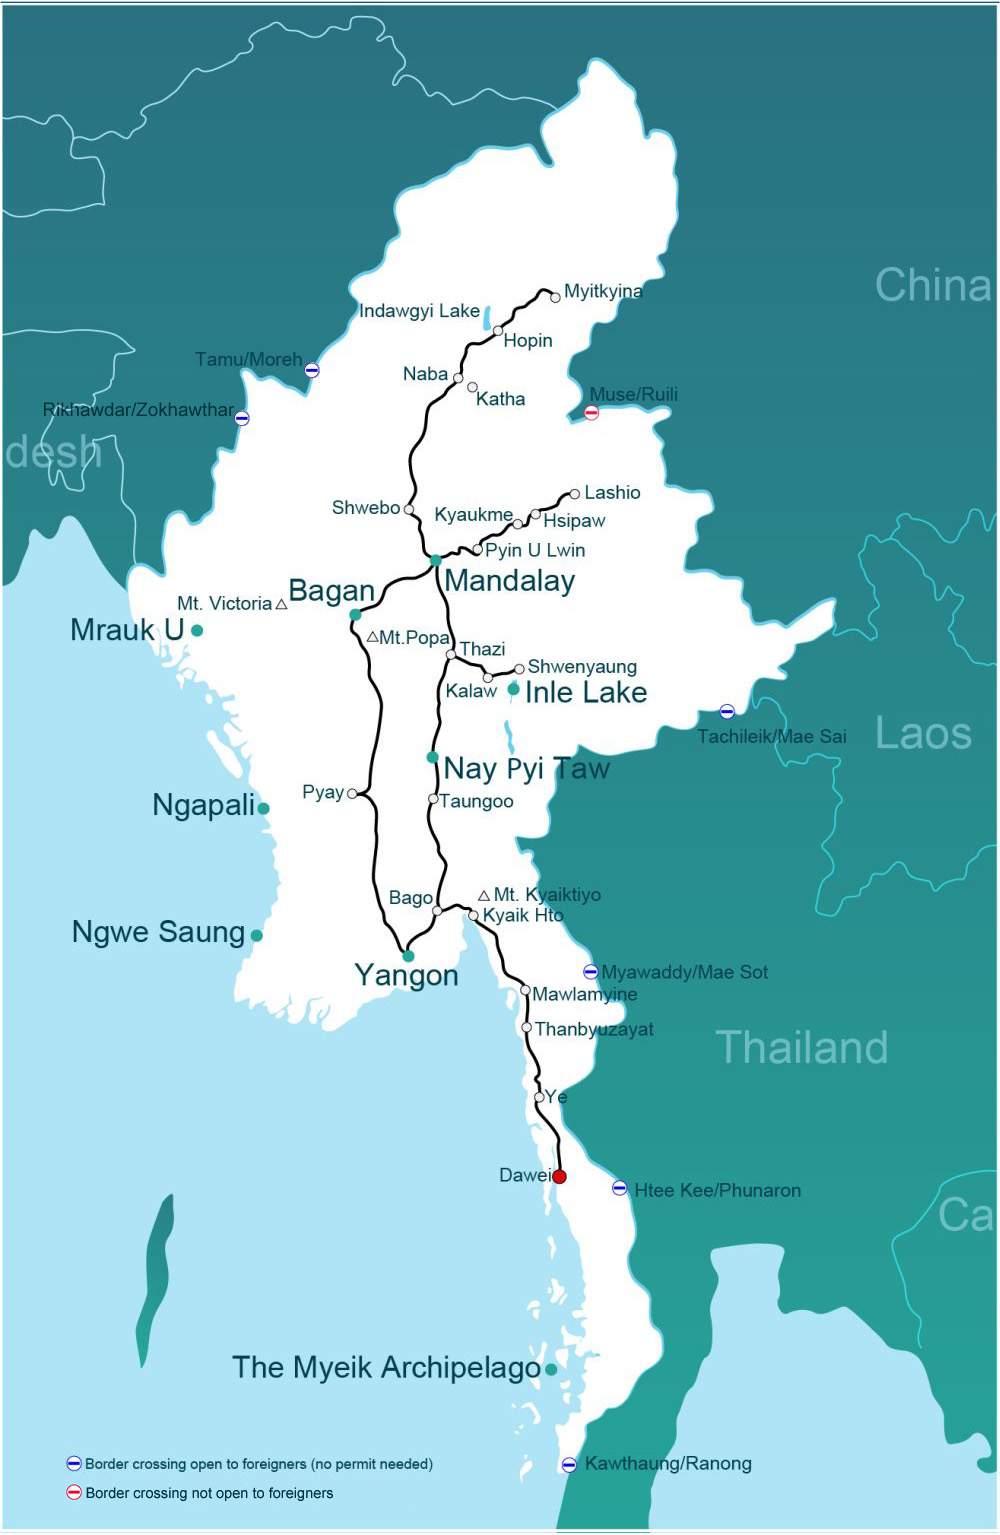 Getting Away From Dawei | Go-Myanmar.com